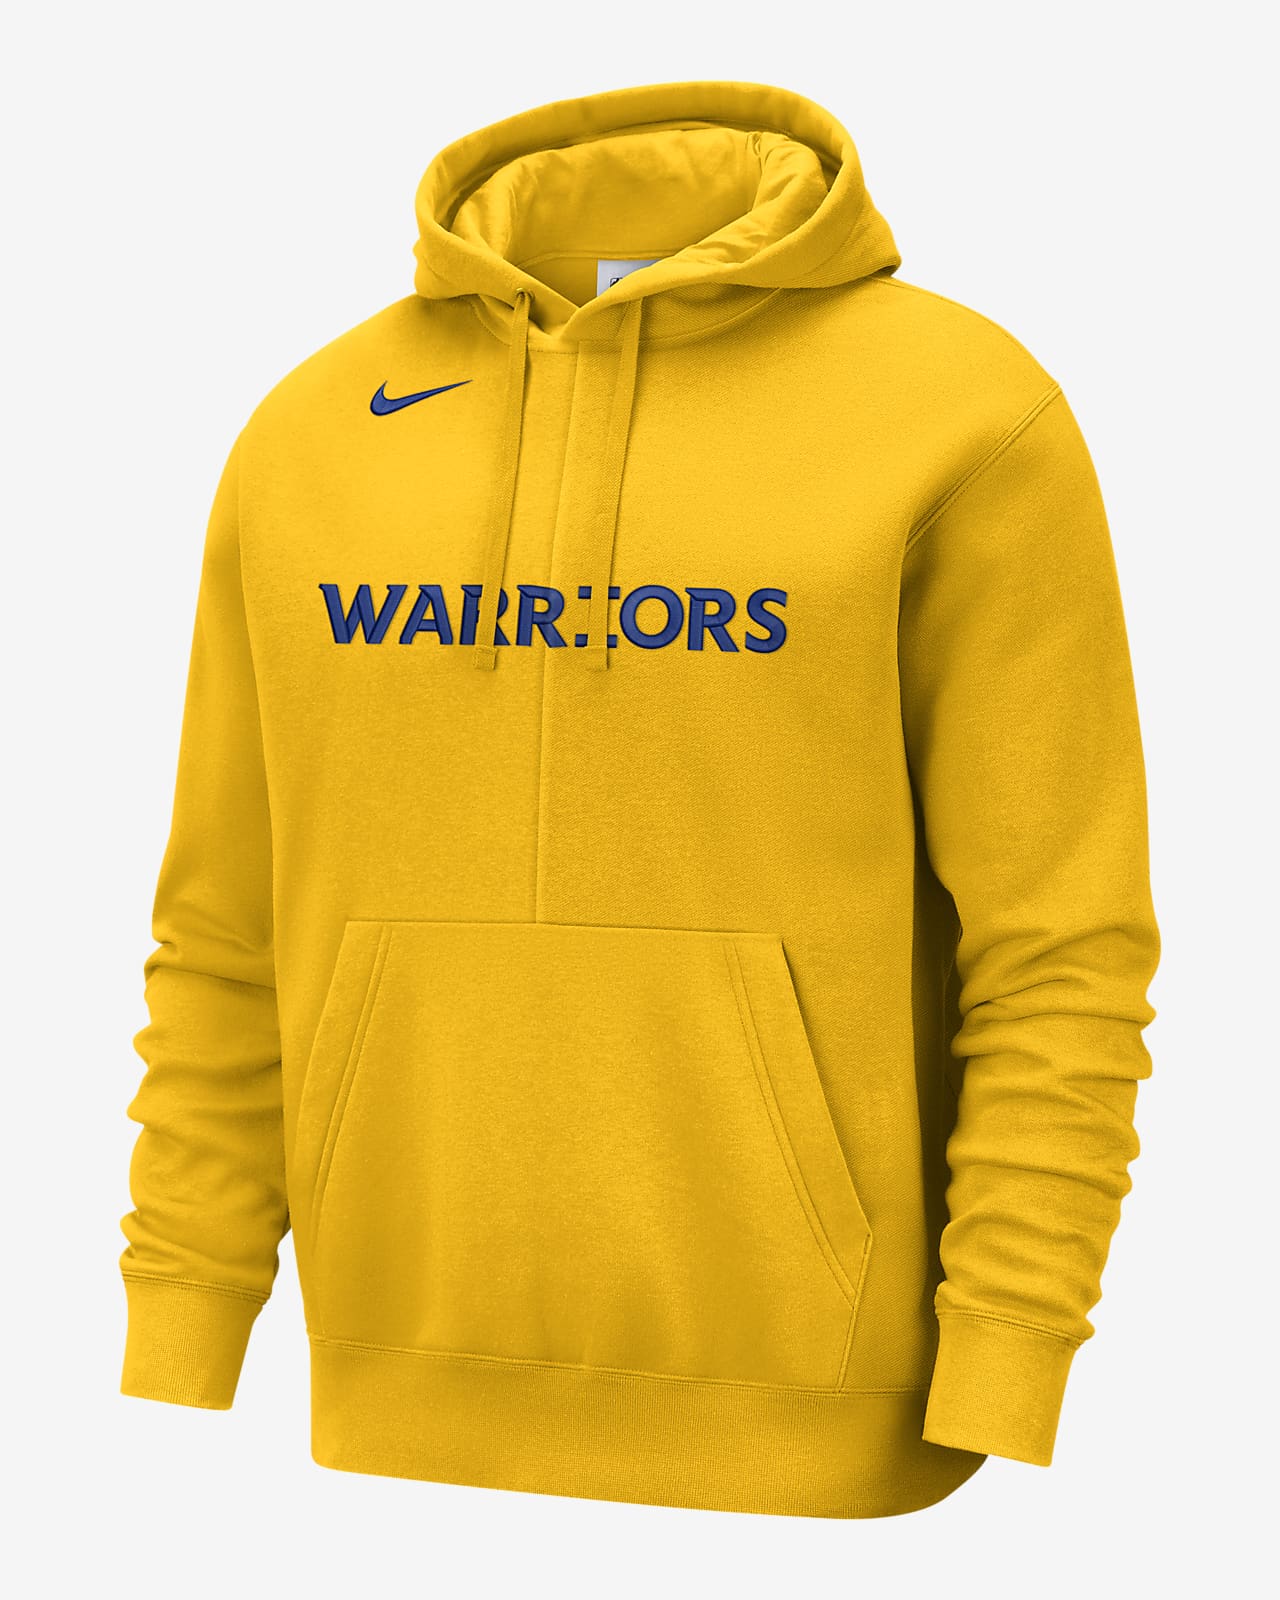 Golden State Warriors Courtside NBA Fleece Pullover Hoodie. Nike. com